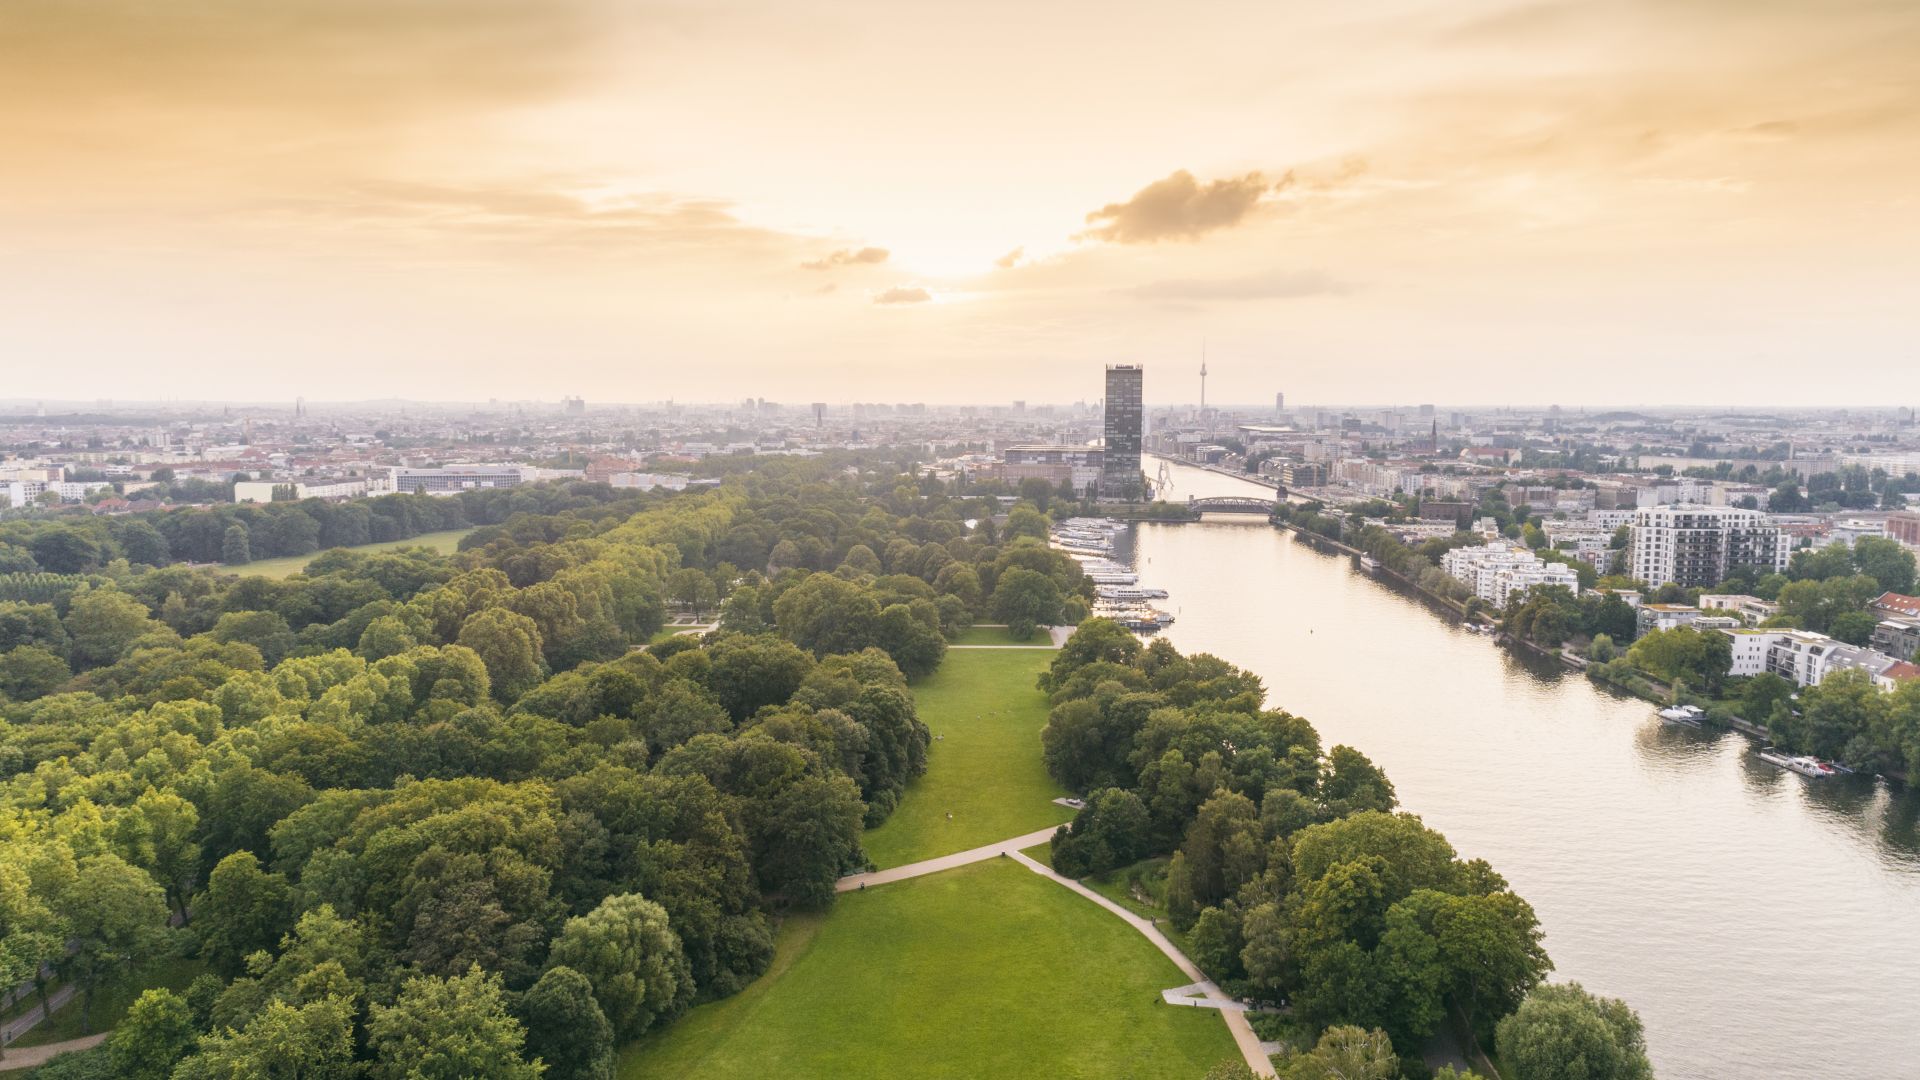 Berlin: Treptower Park with city skyline on background